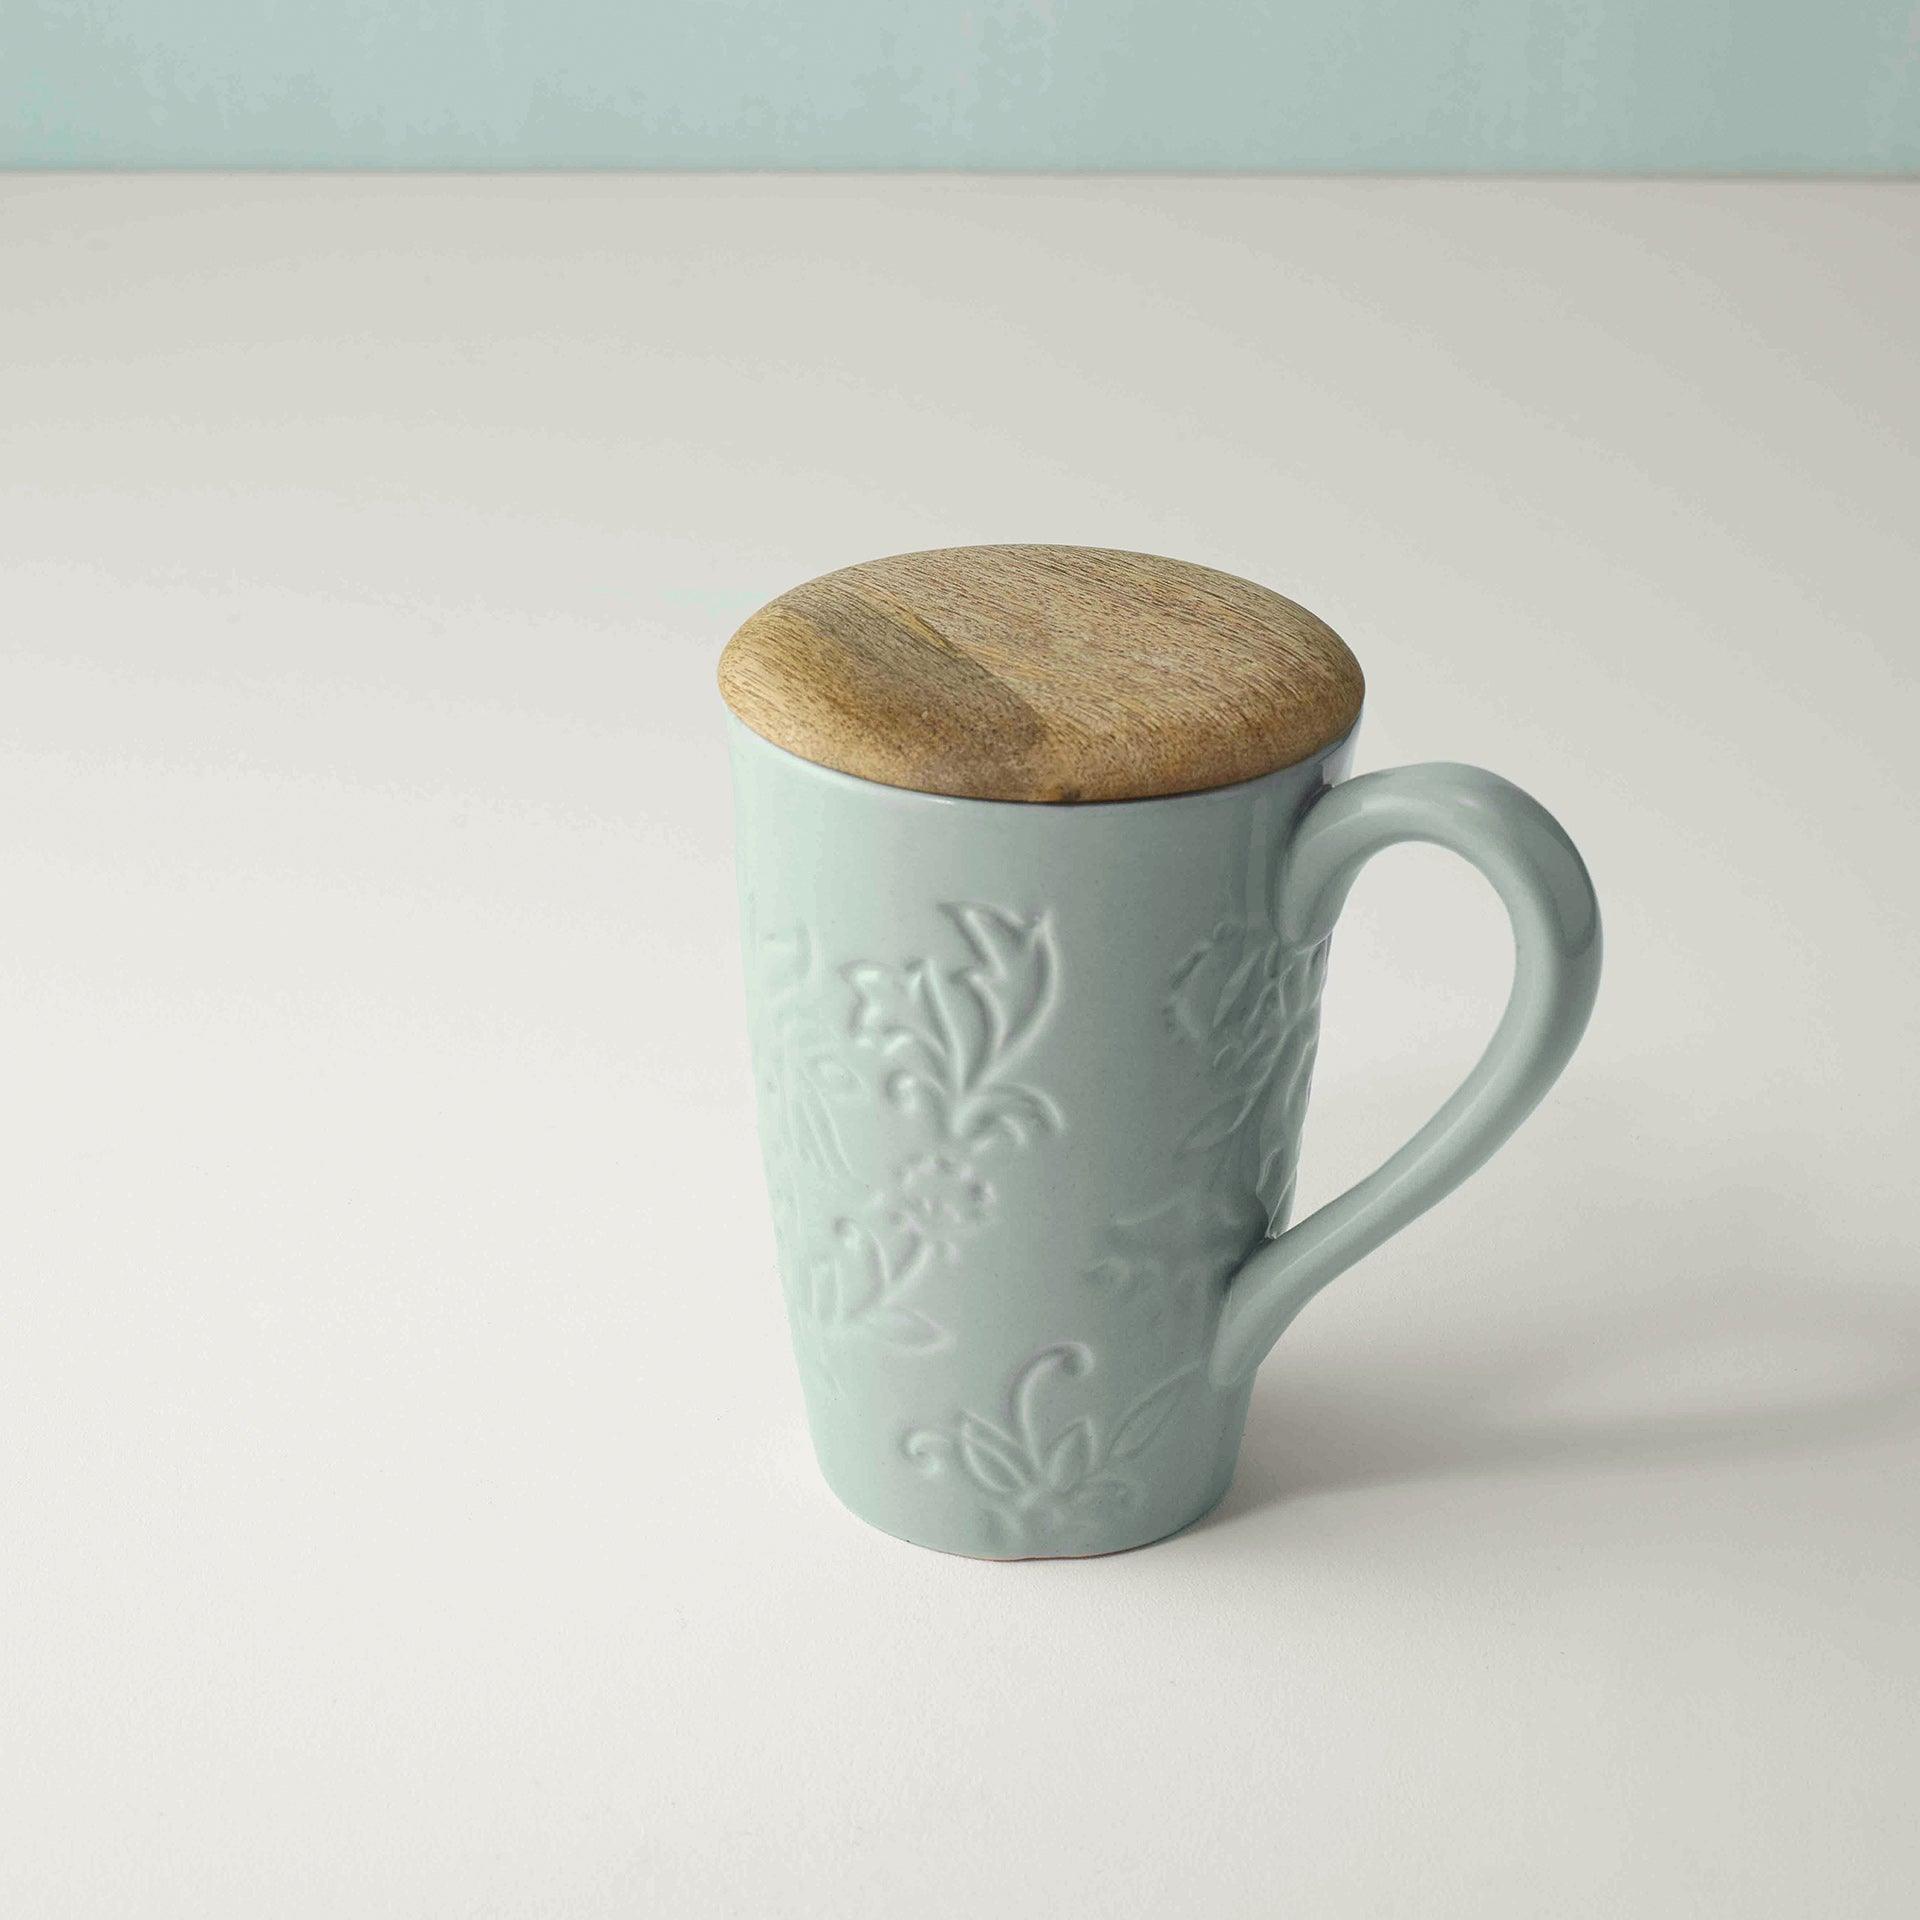 Upper crust mug with wooden lid